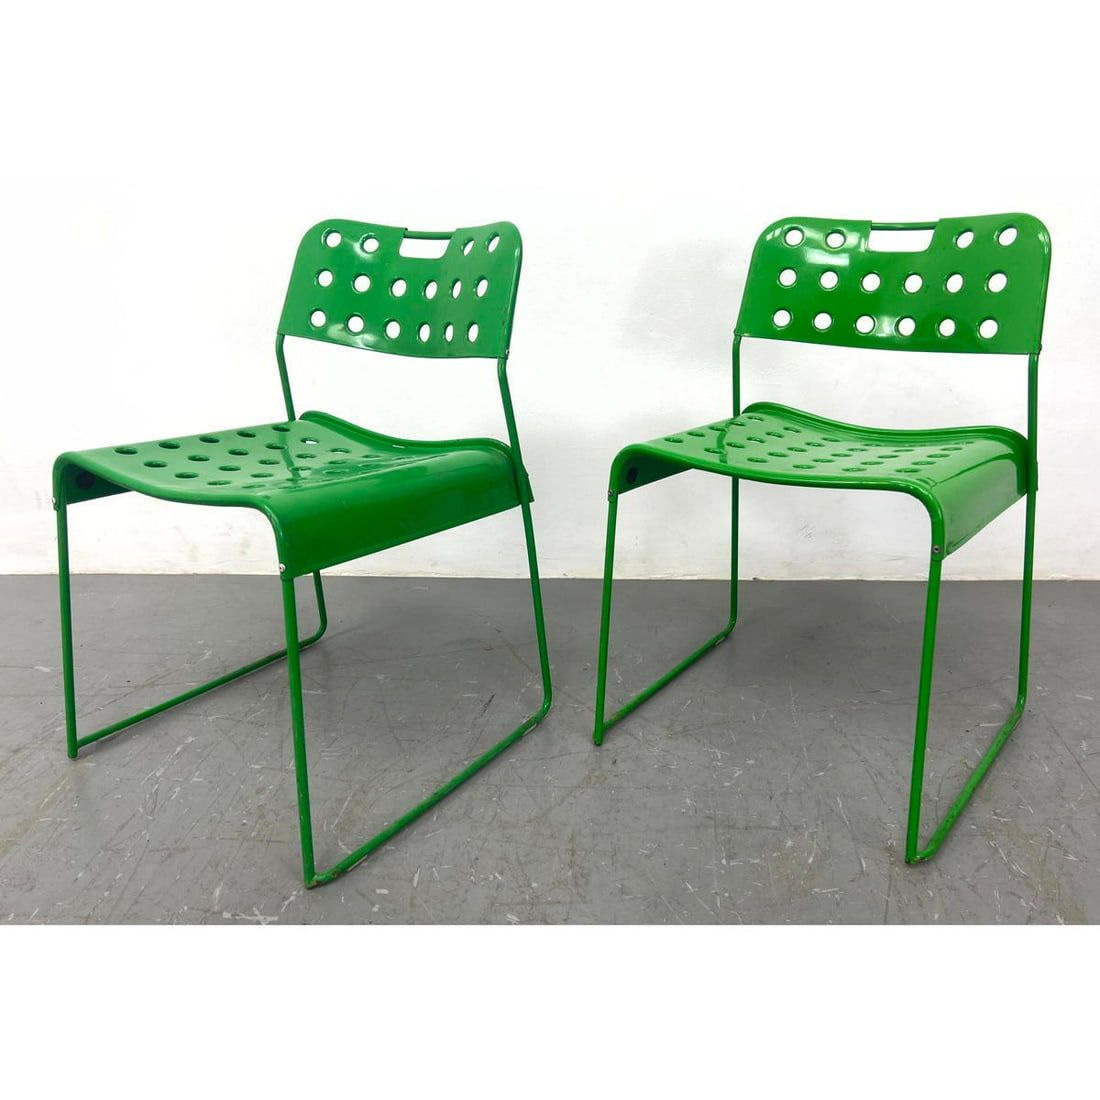 Pr BIEFFEPLAST Italy Steel Side Chairs. Modernist Italian design. Green Finish. Designed by RODNEY K